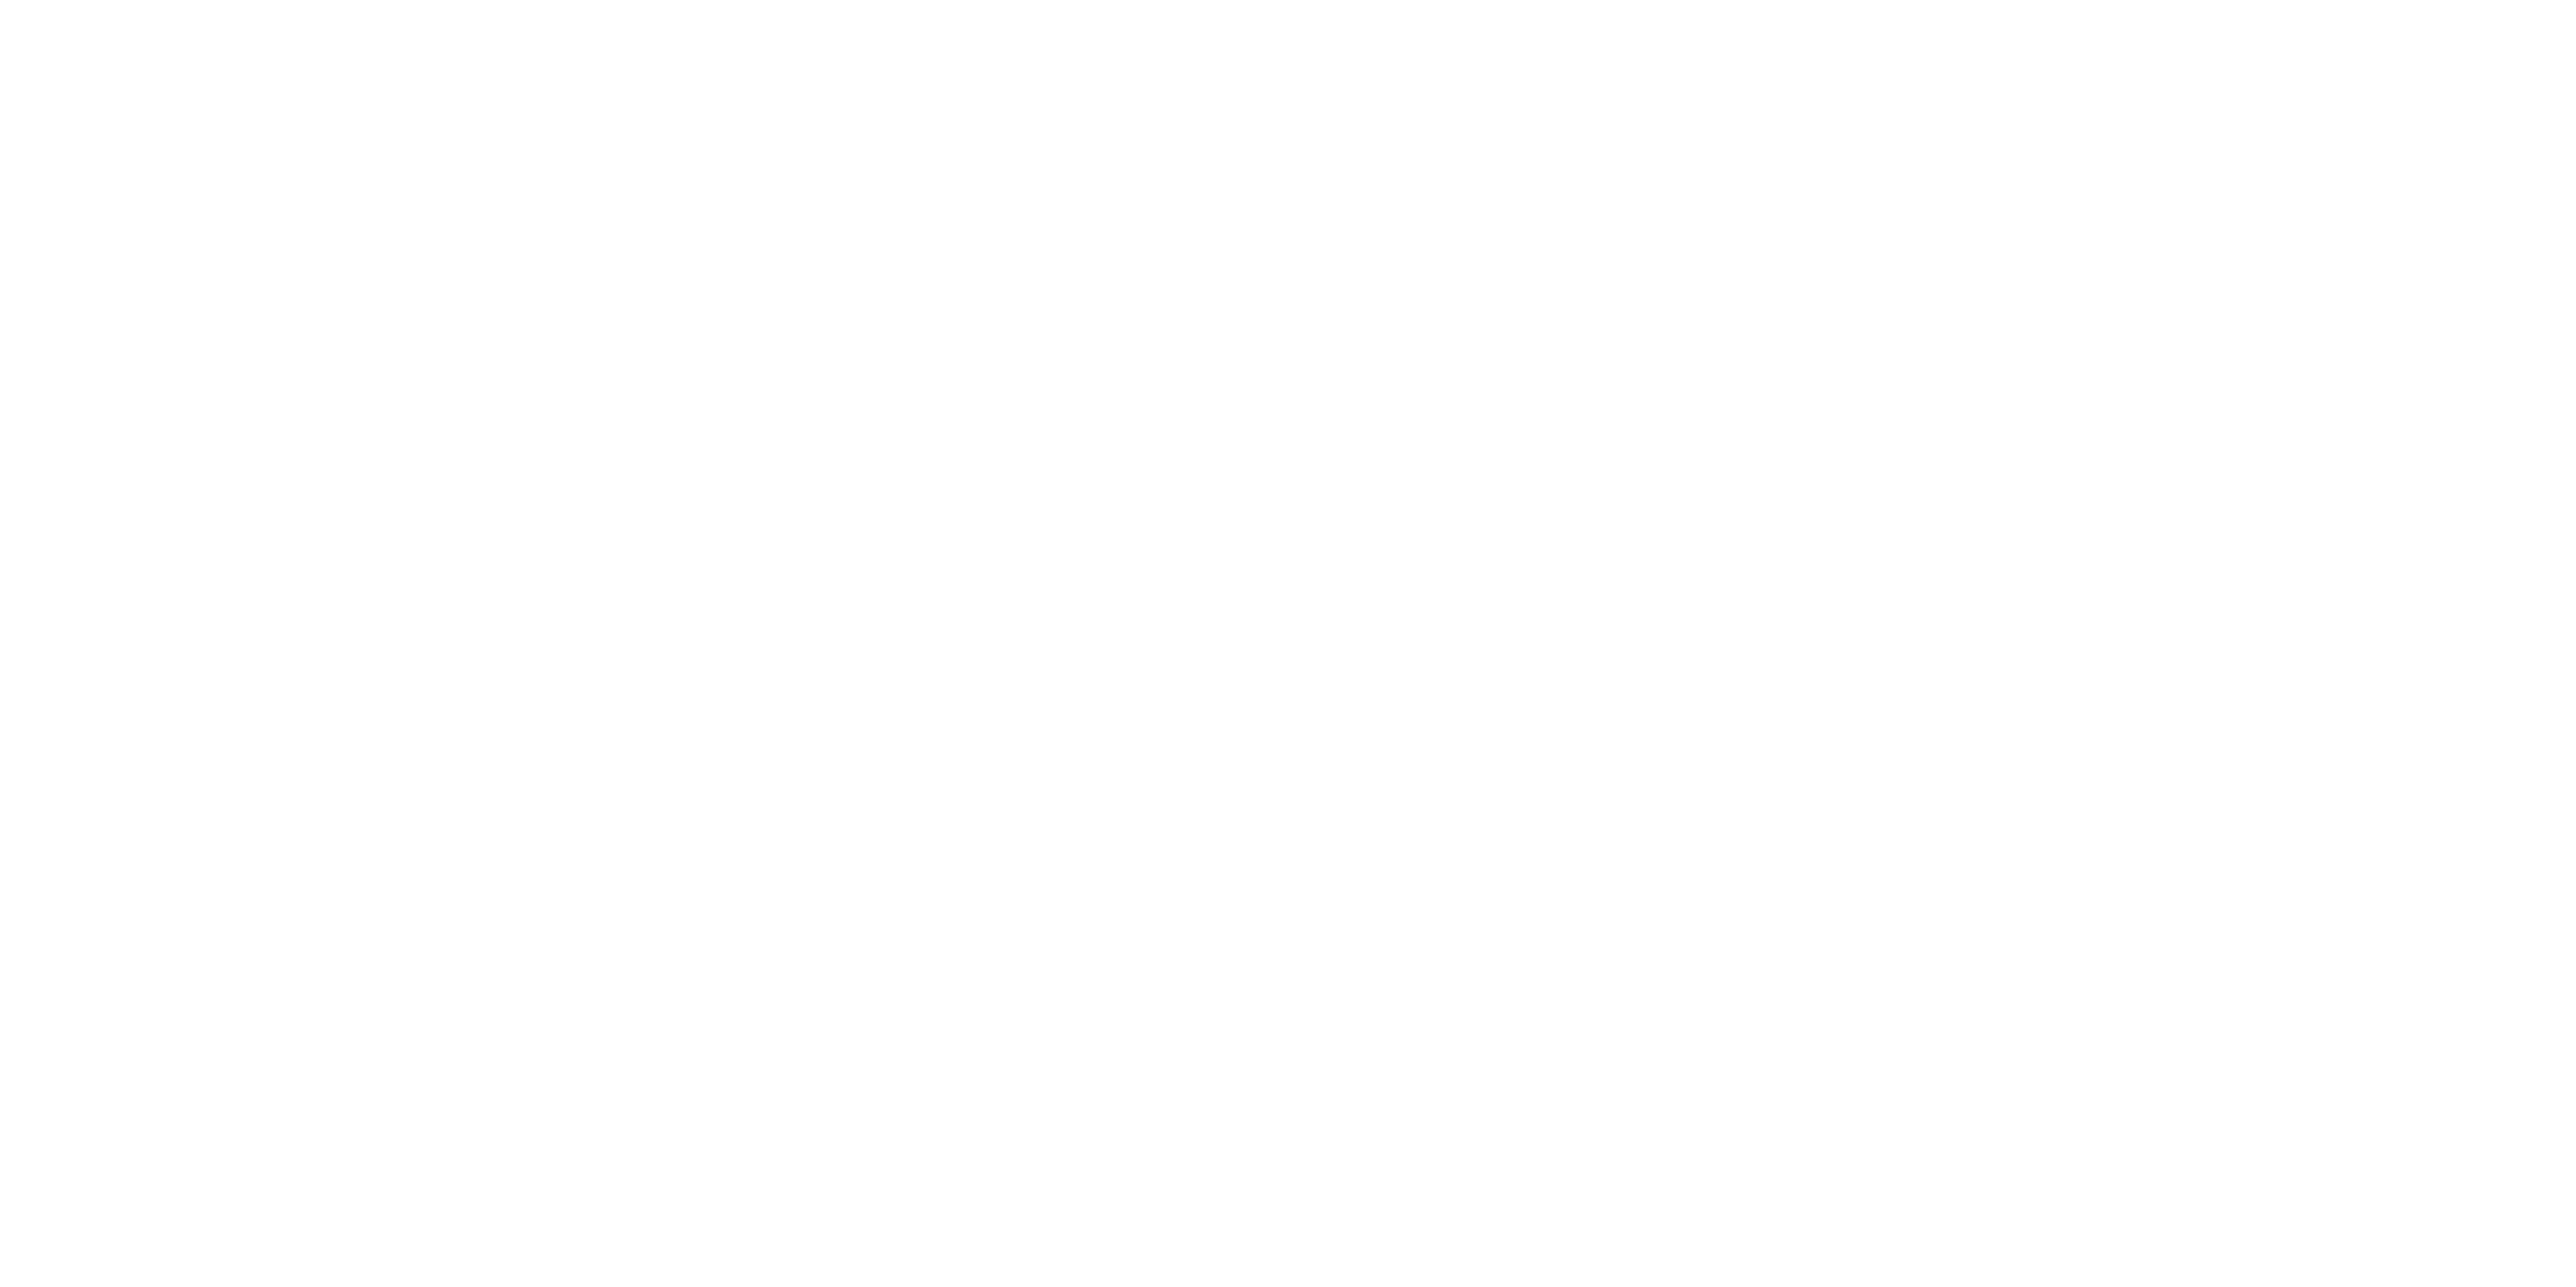 Paytring Logo